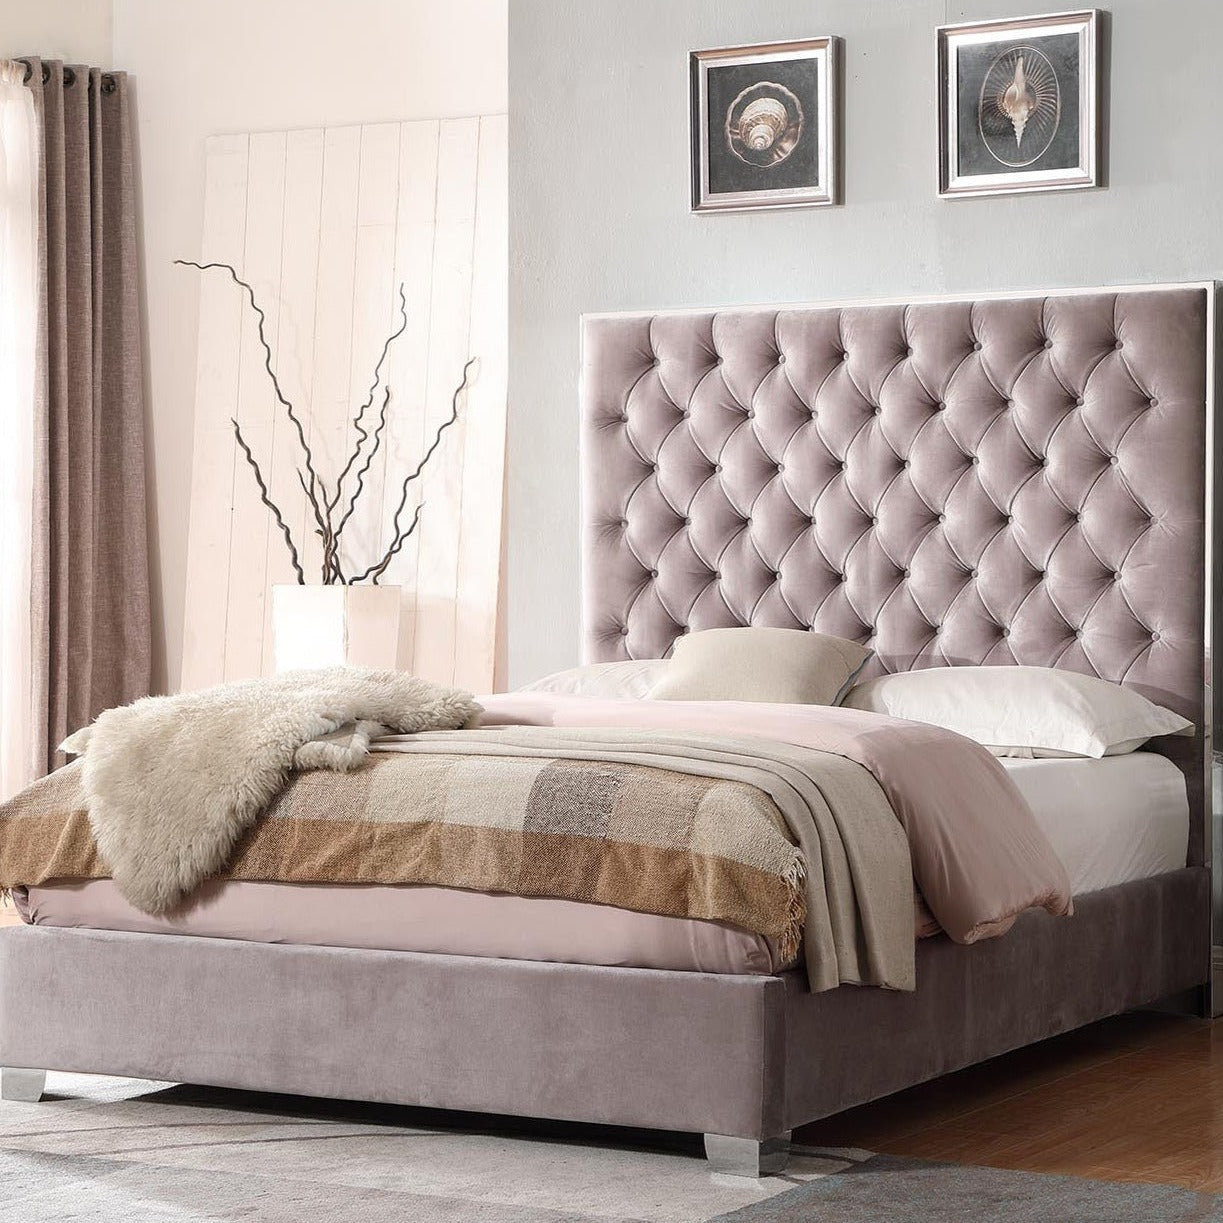 B112 - KIARA Queen Size Bed - 45675